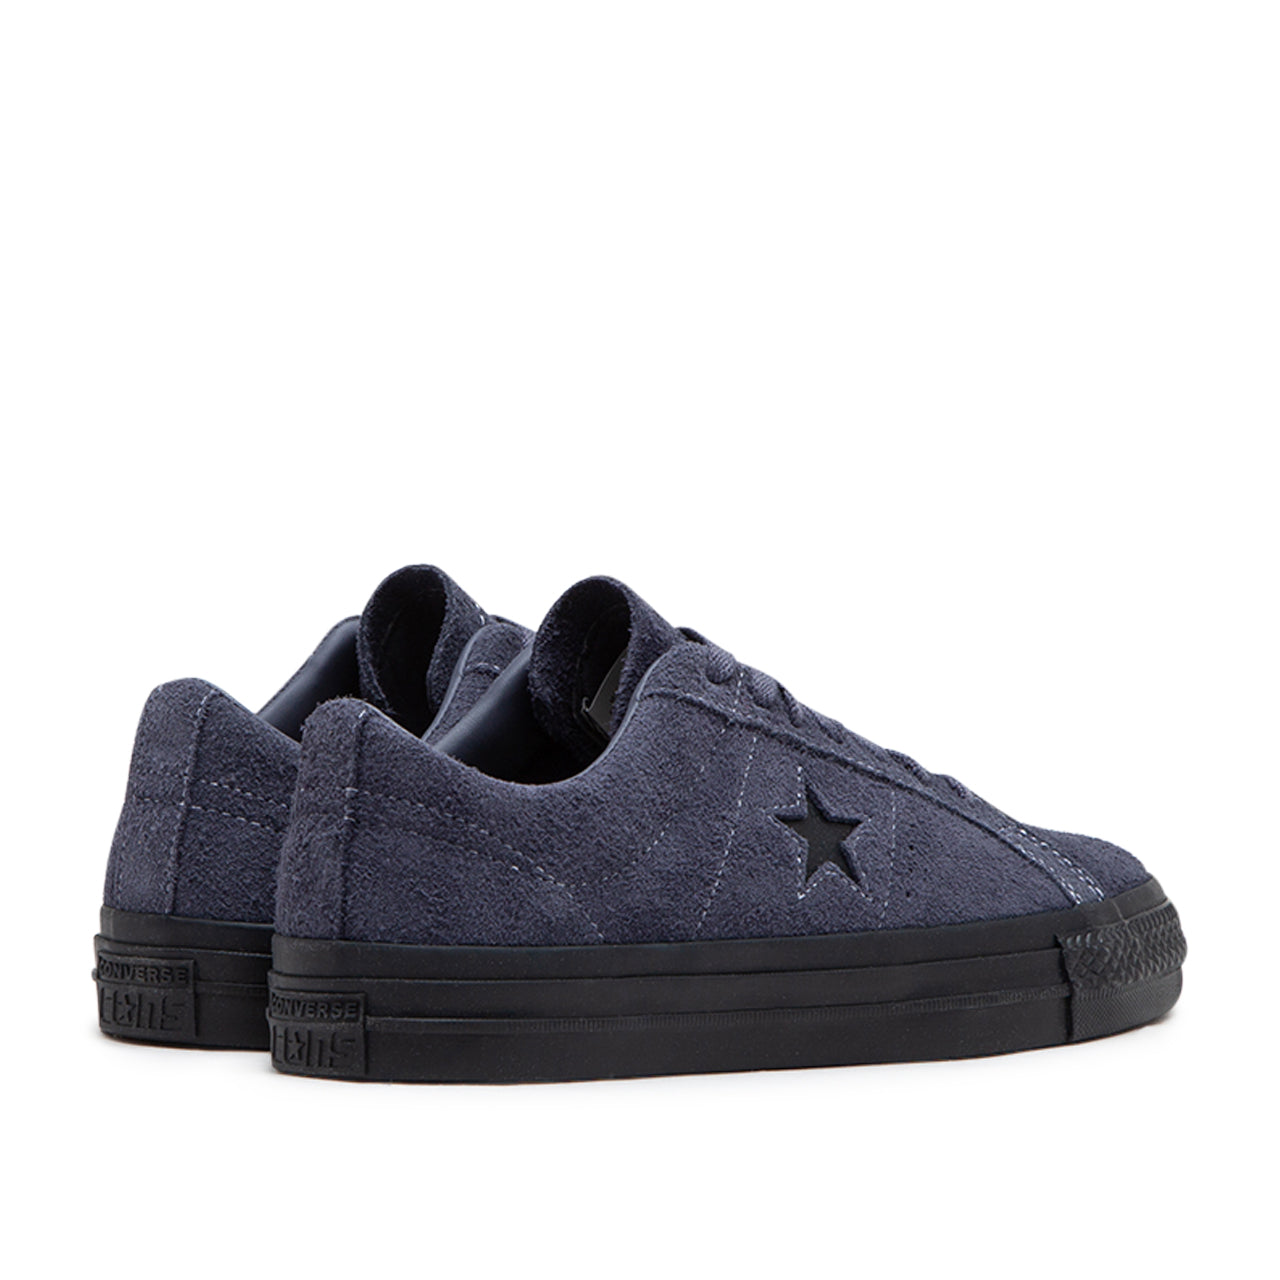 Converse Cons One Star Pro Suede (Blau / Schwarz)  - Cheap Sneakersbe Jordan Outlet